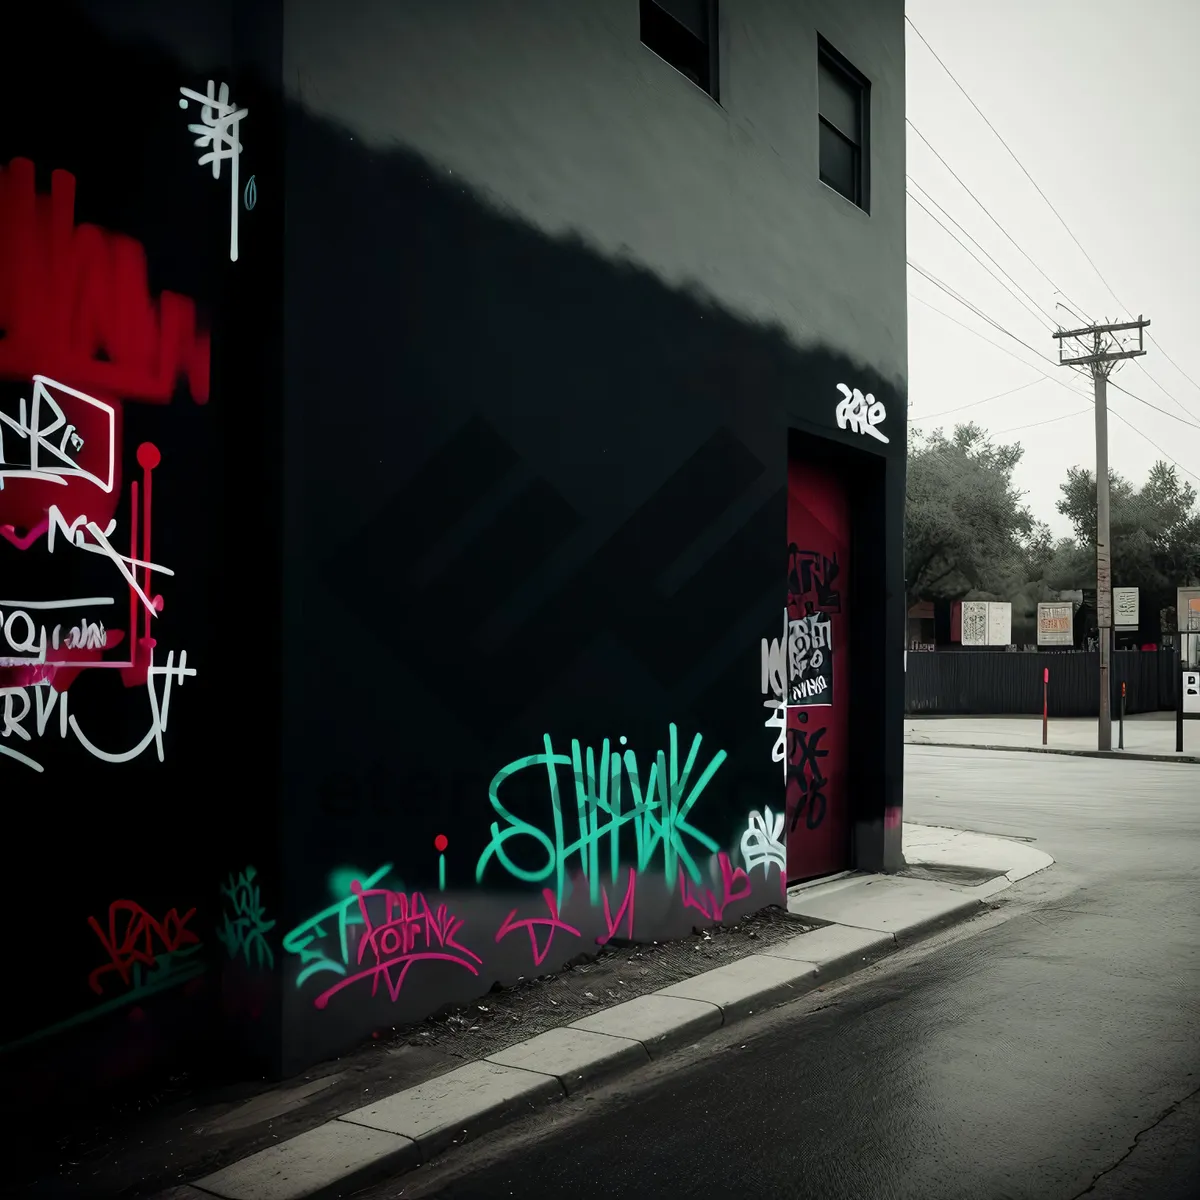 Picture of Urban Art: City Graffiti on Building Door